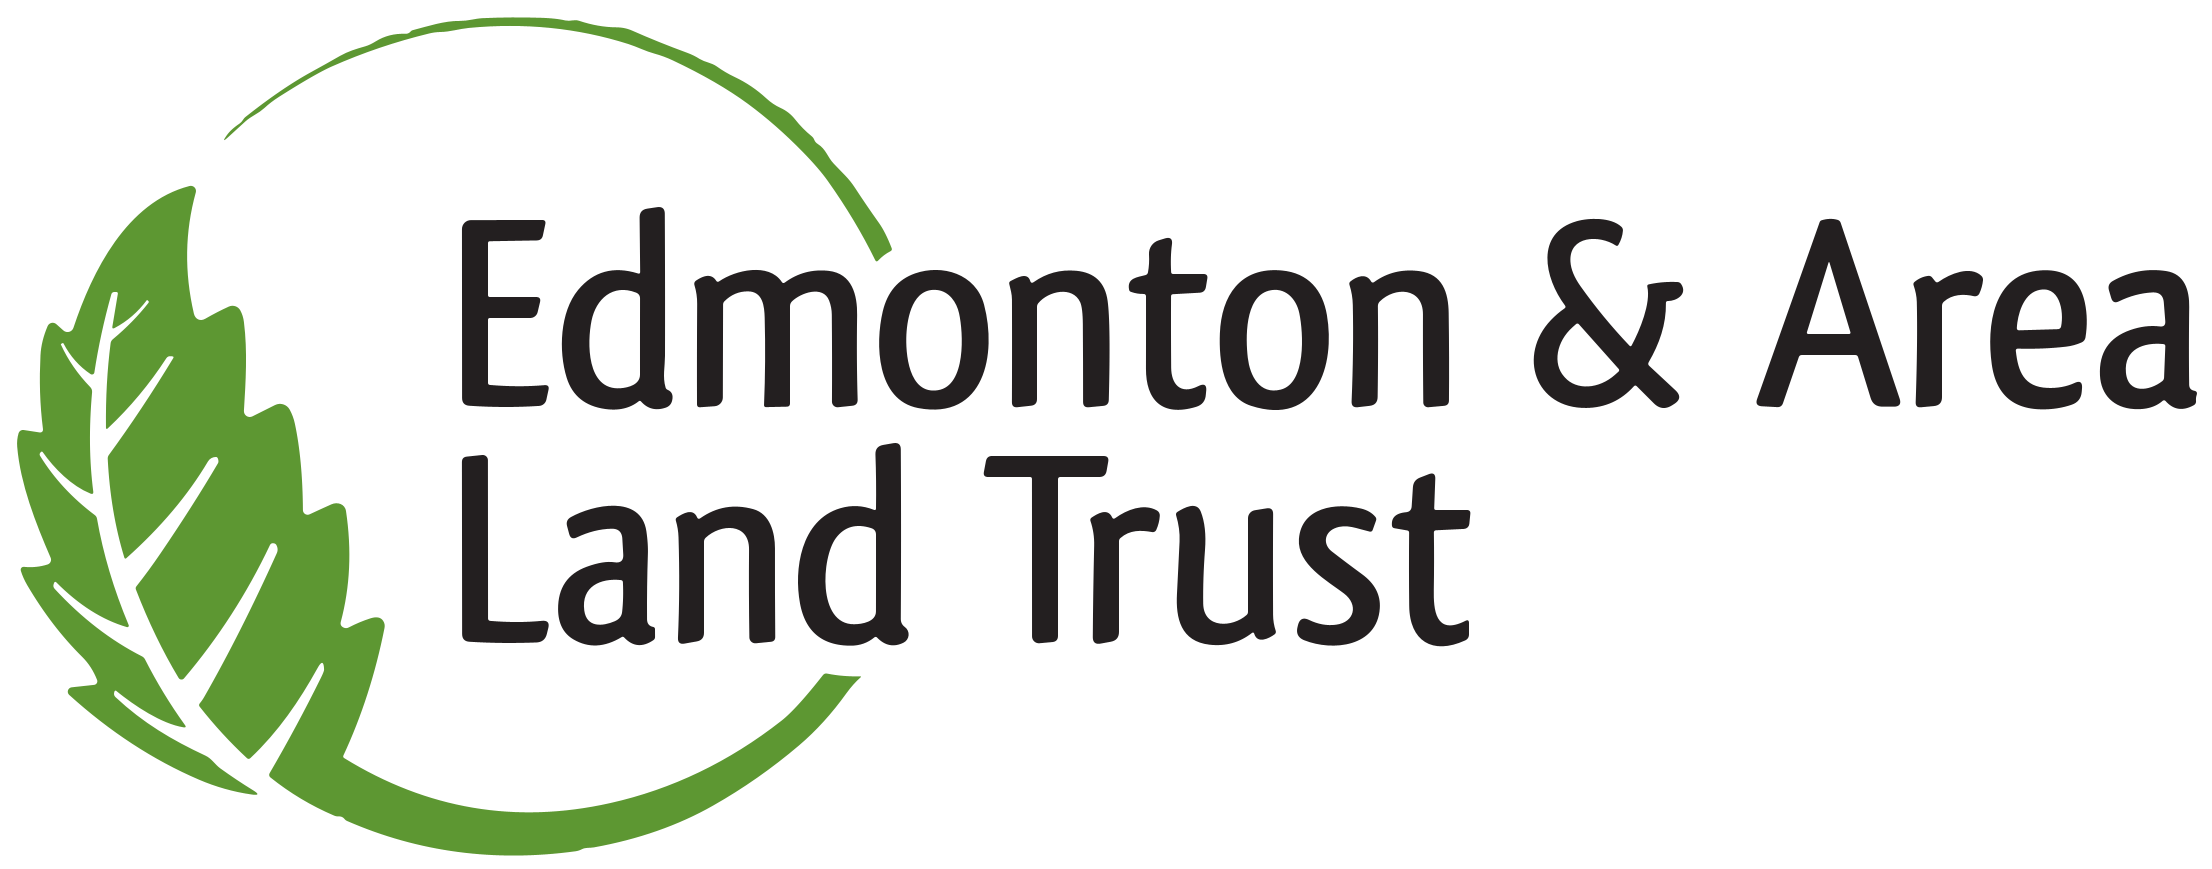 Logo for Edmonton & Area Land Trust on a transparent background